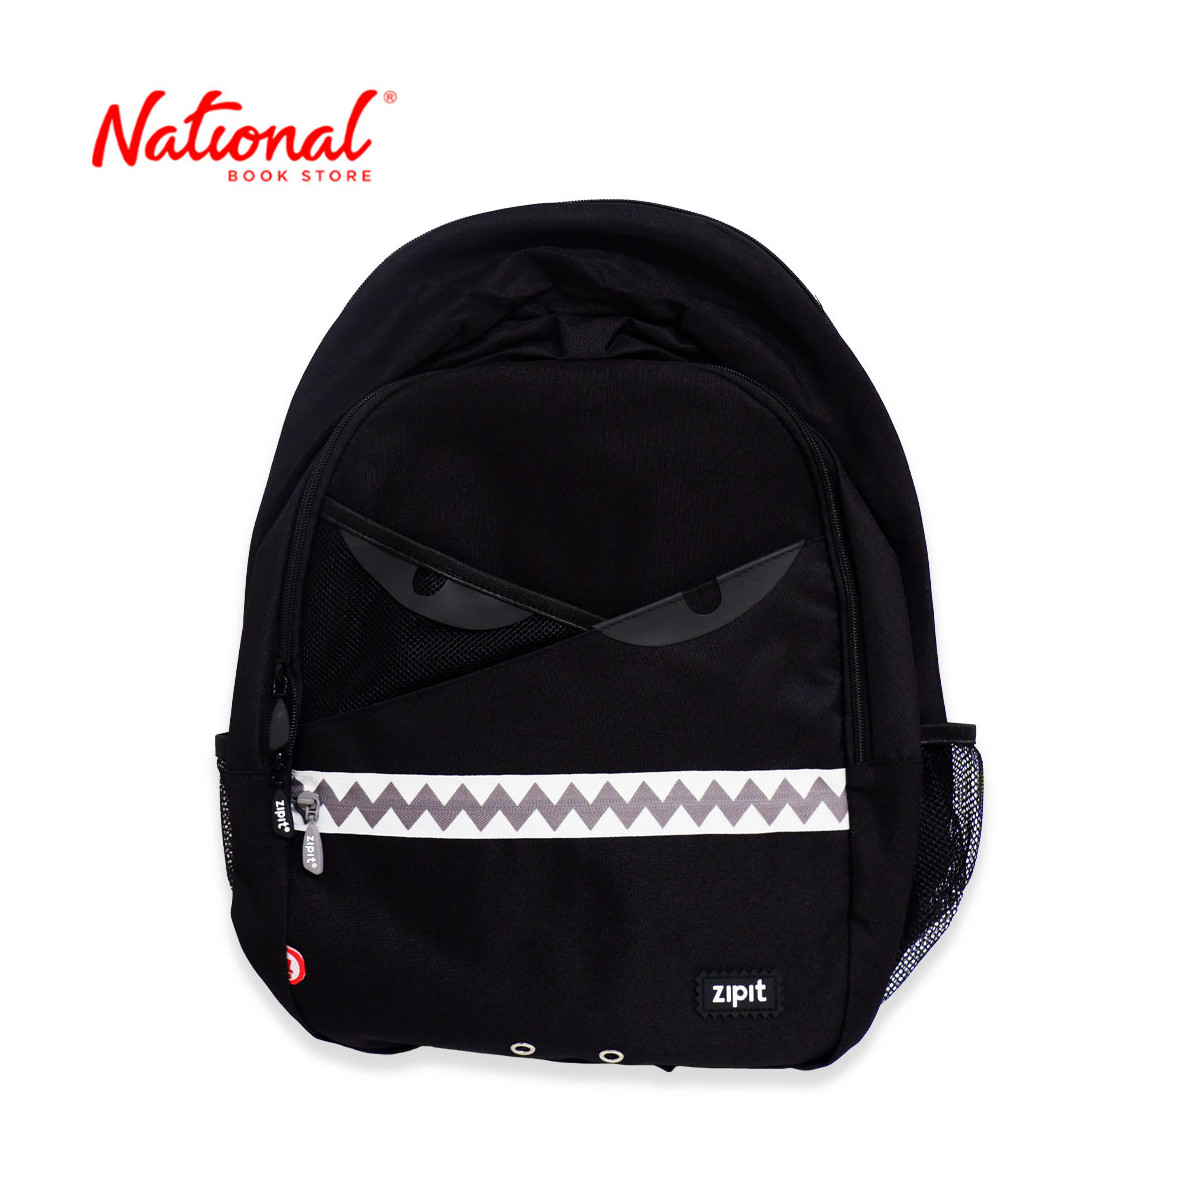 Zipit Razor Backpack RBB2CL1 Black Lockable - Backpacks - Gift Items for Kids